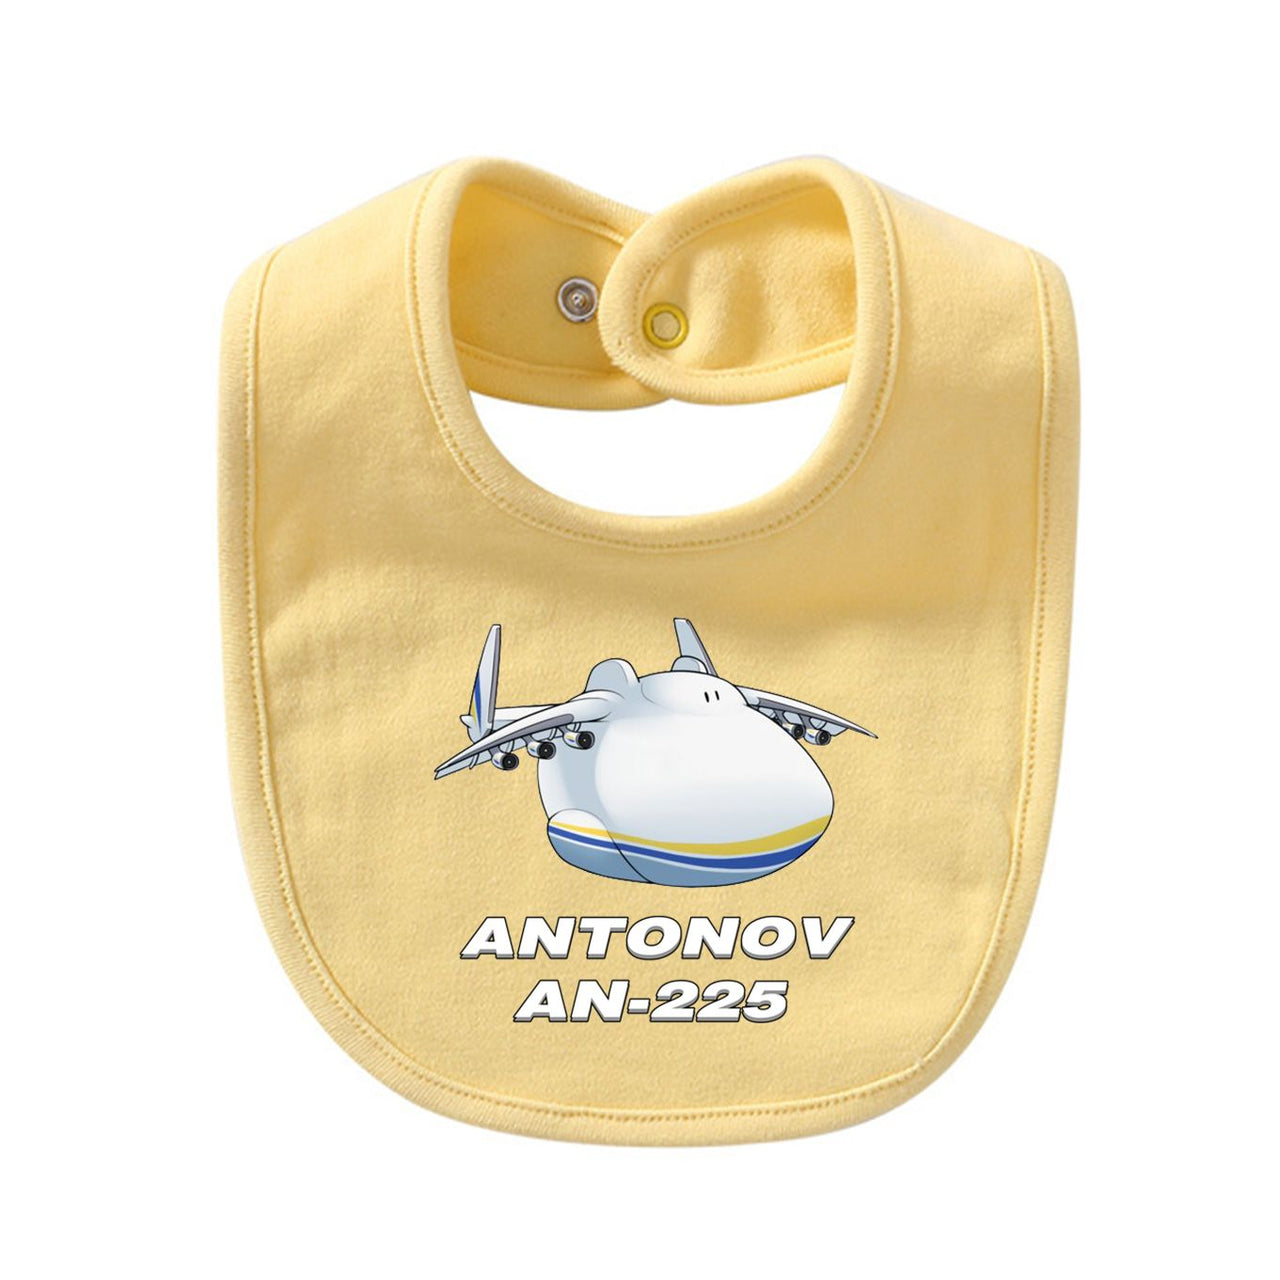 Antonov AN-225 (21) Designed Baby Saliva & Feeding Towels